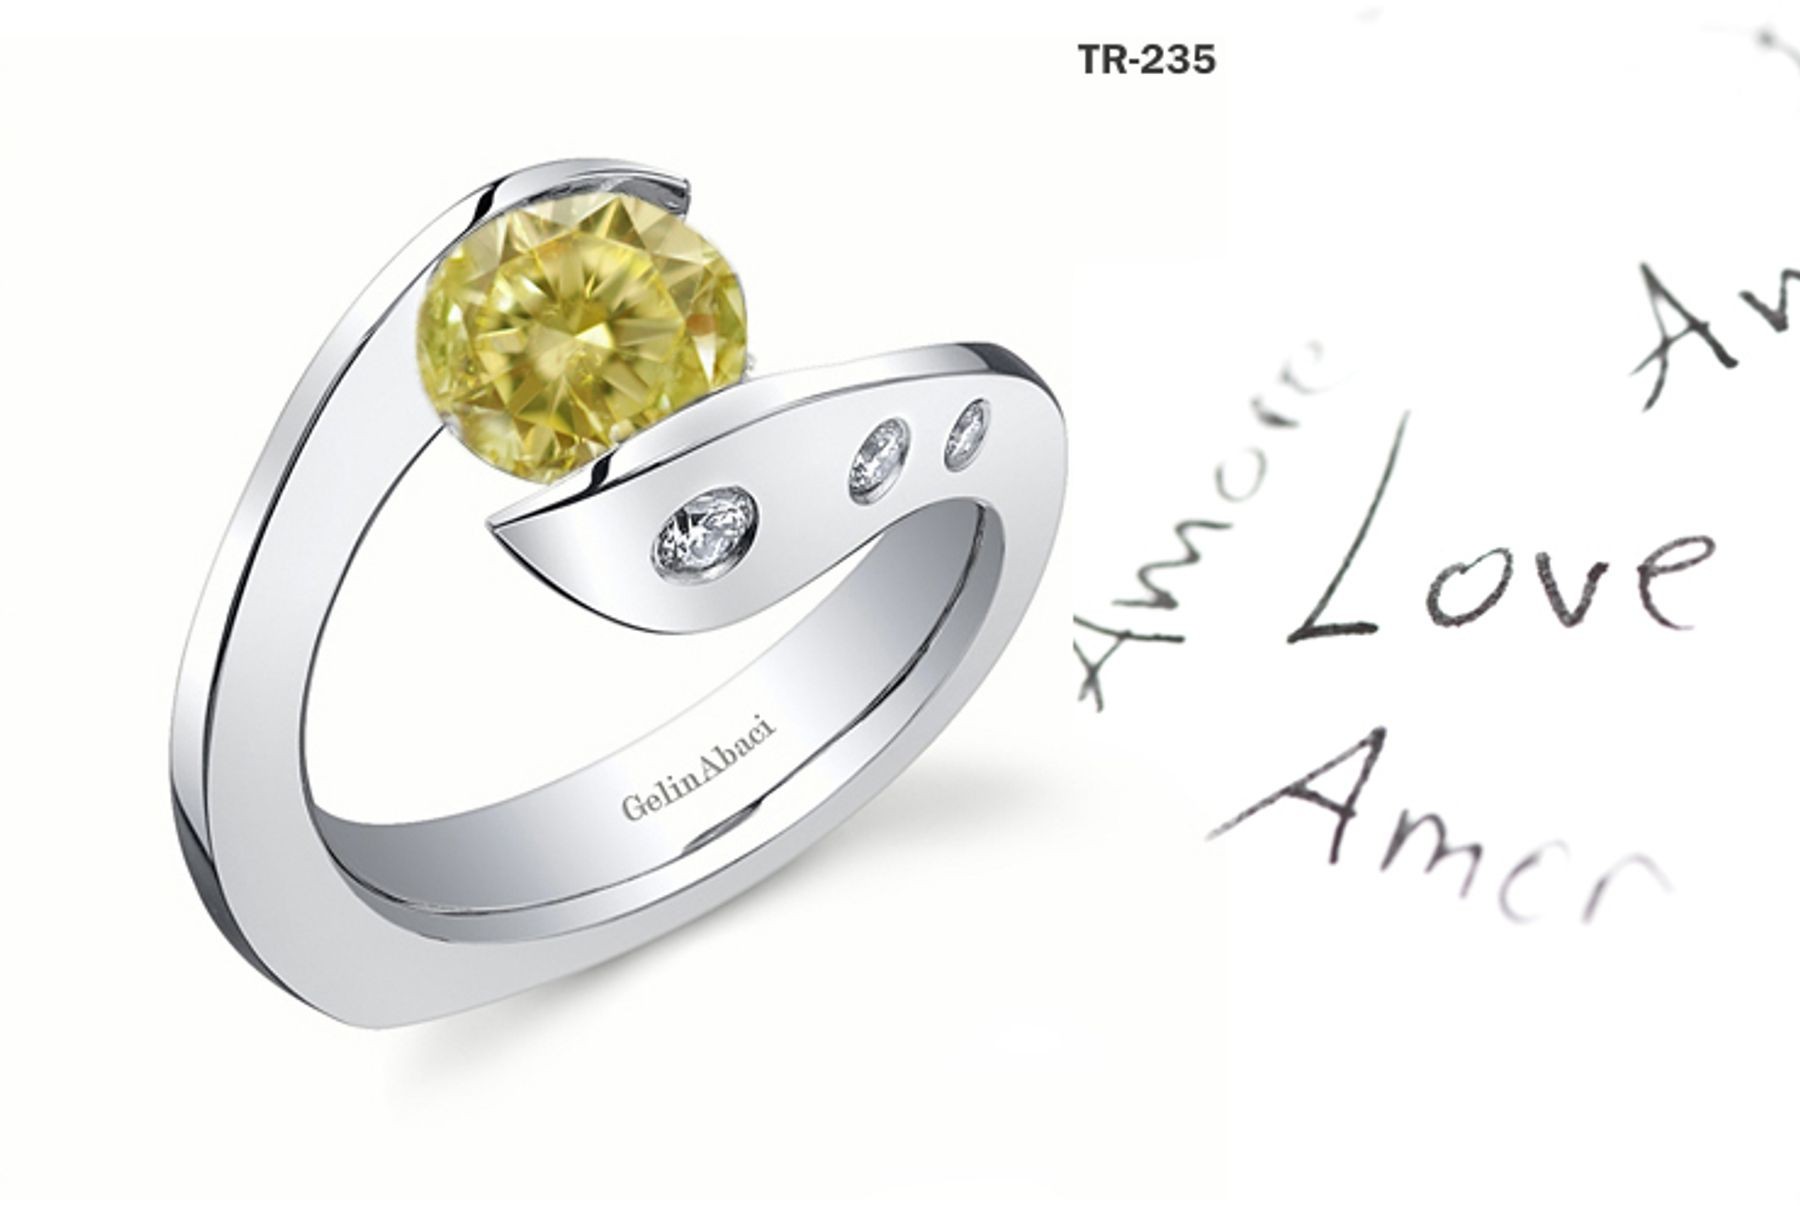 Exclusive Design Tension Set Jewelry: Tension Set Yellow Diamond Rings